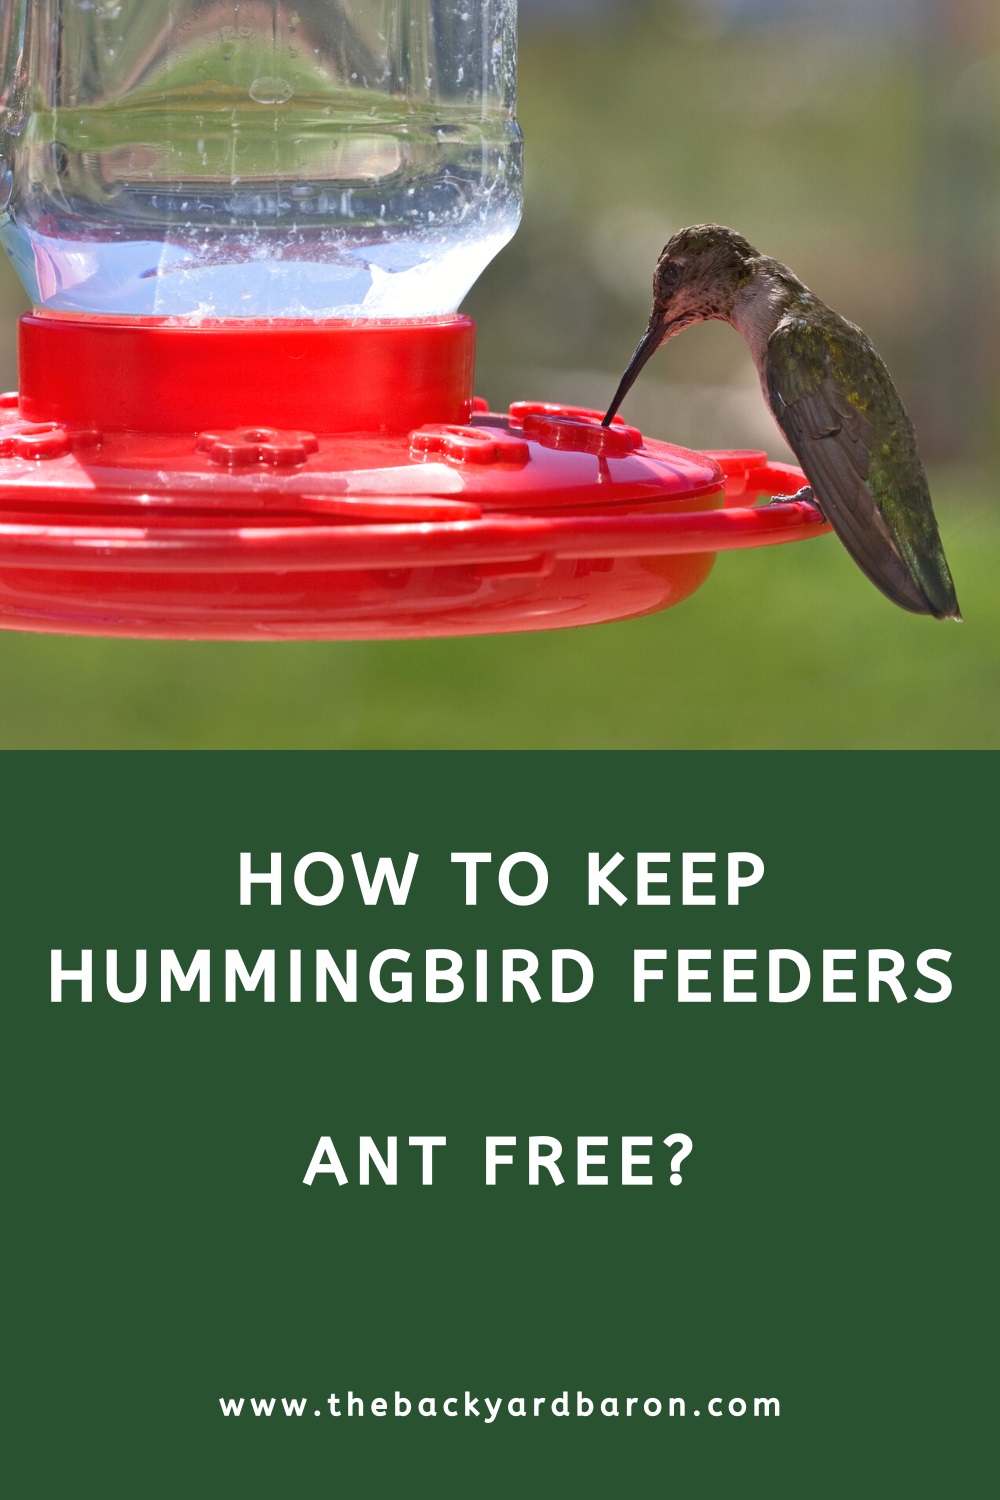 How to keep hummingbird feeders ant free